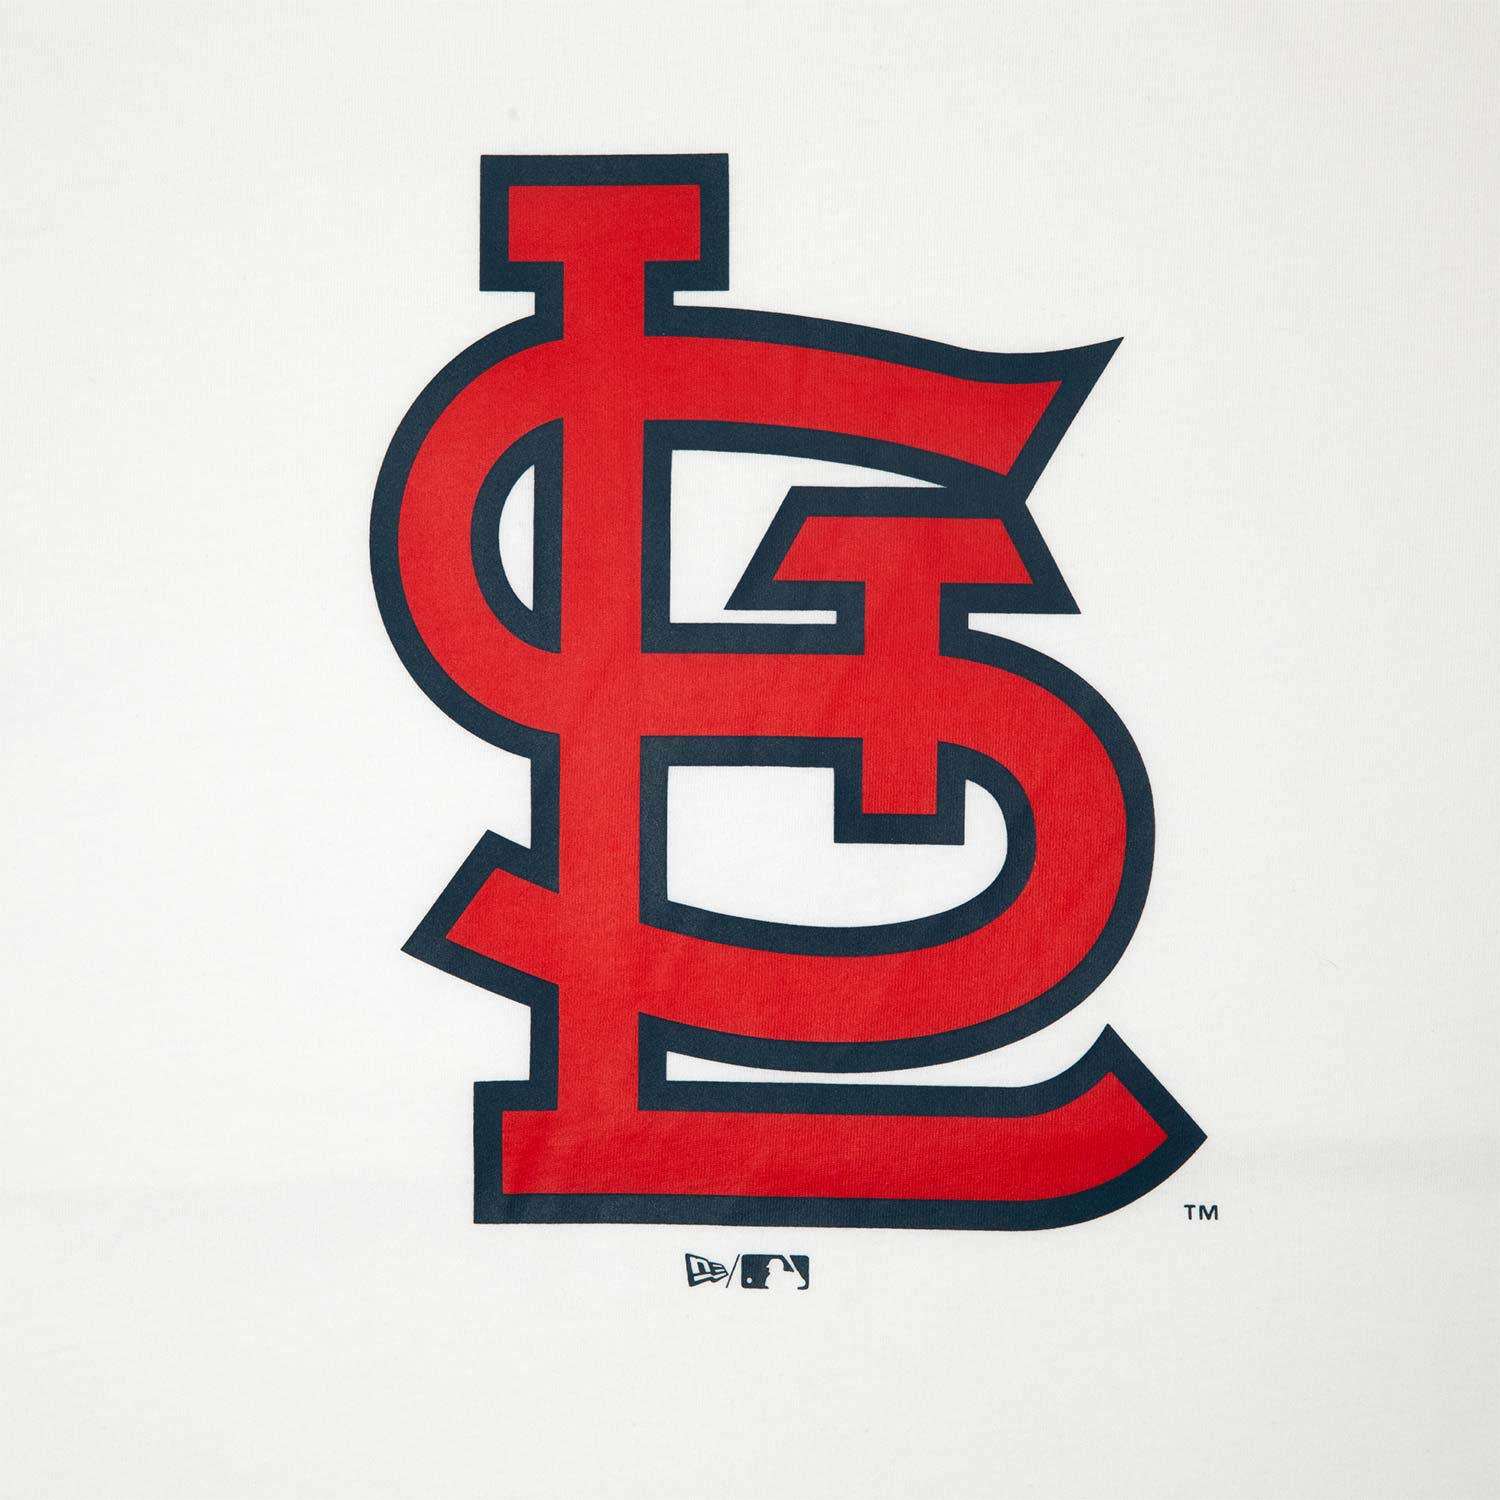 MLB Logos  Baseball Team Logos